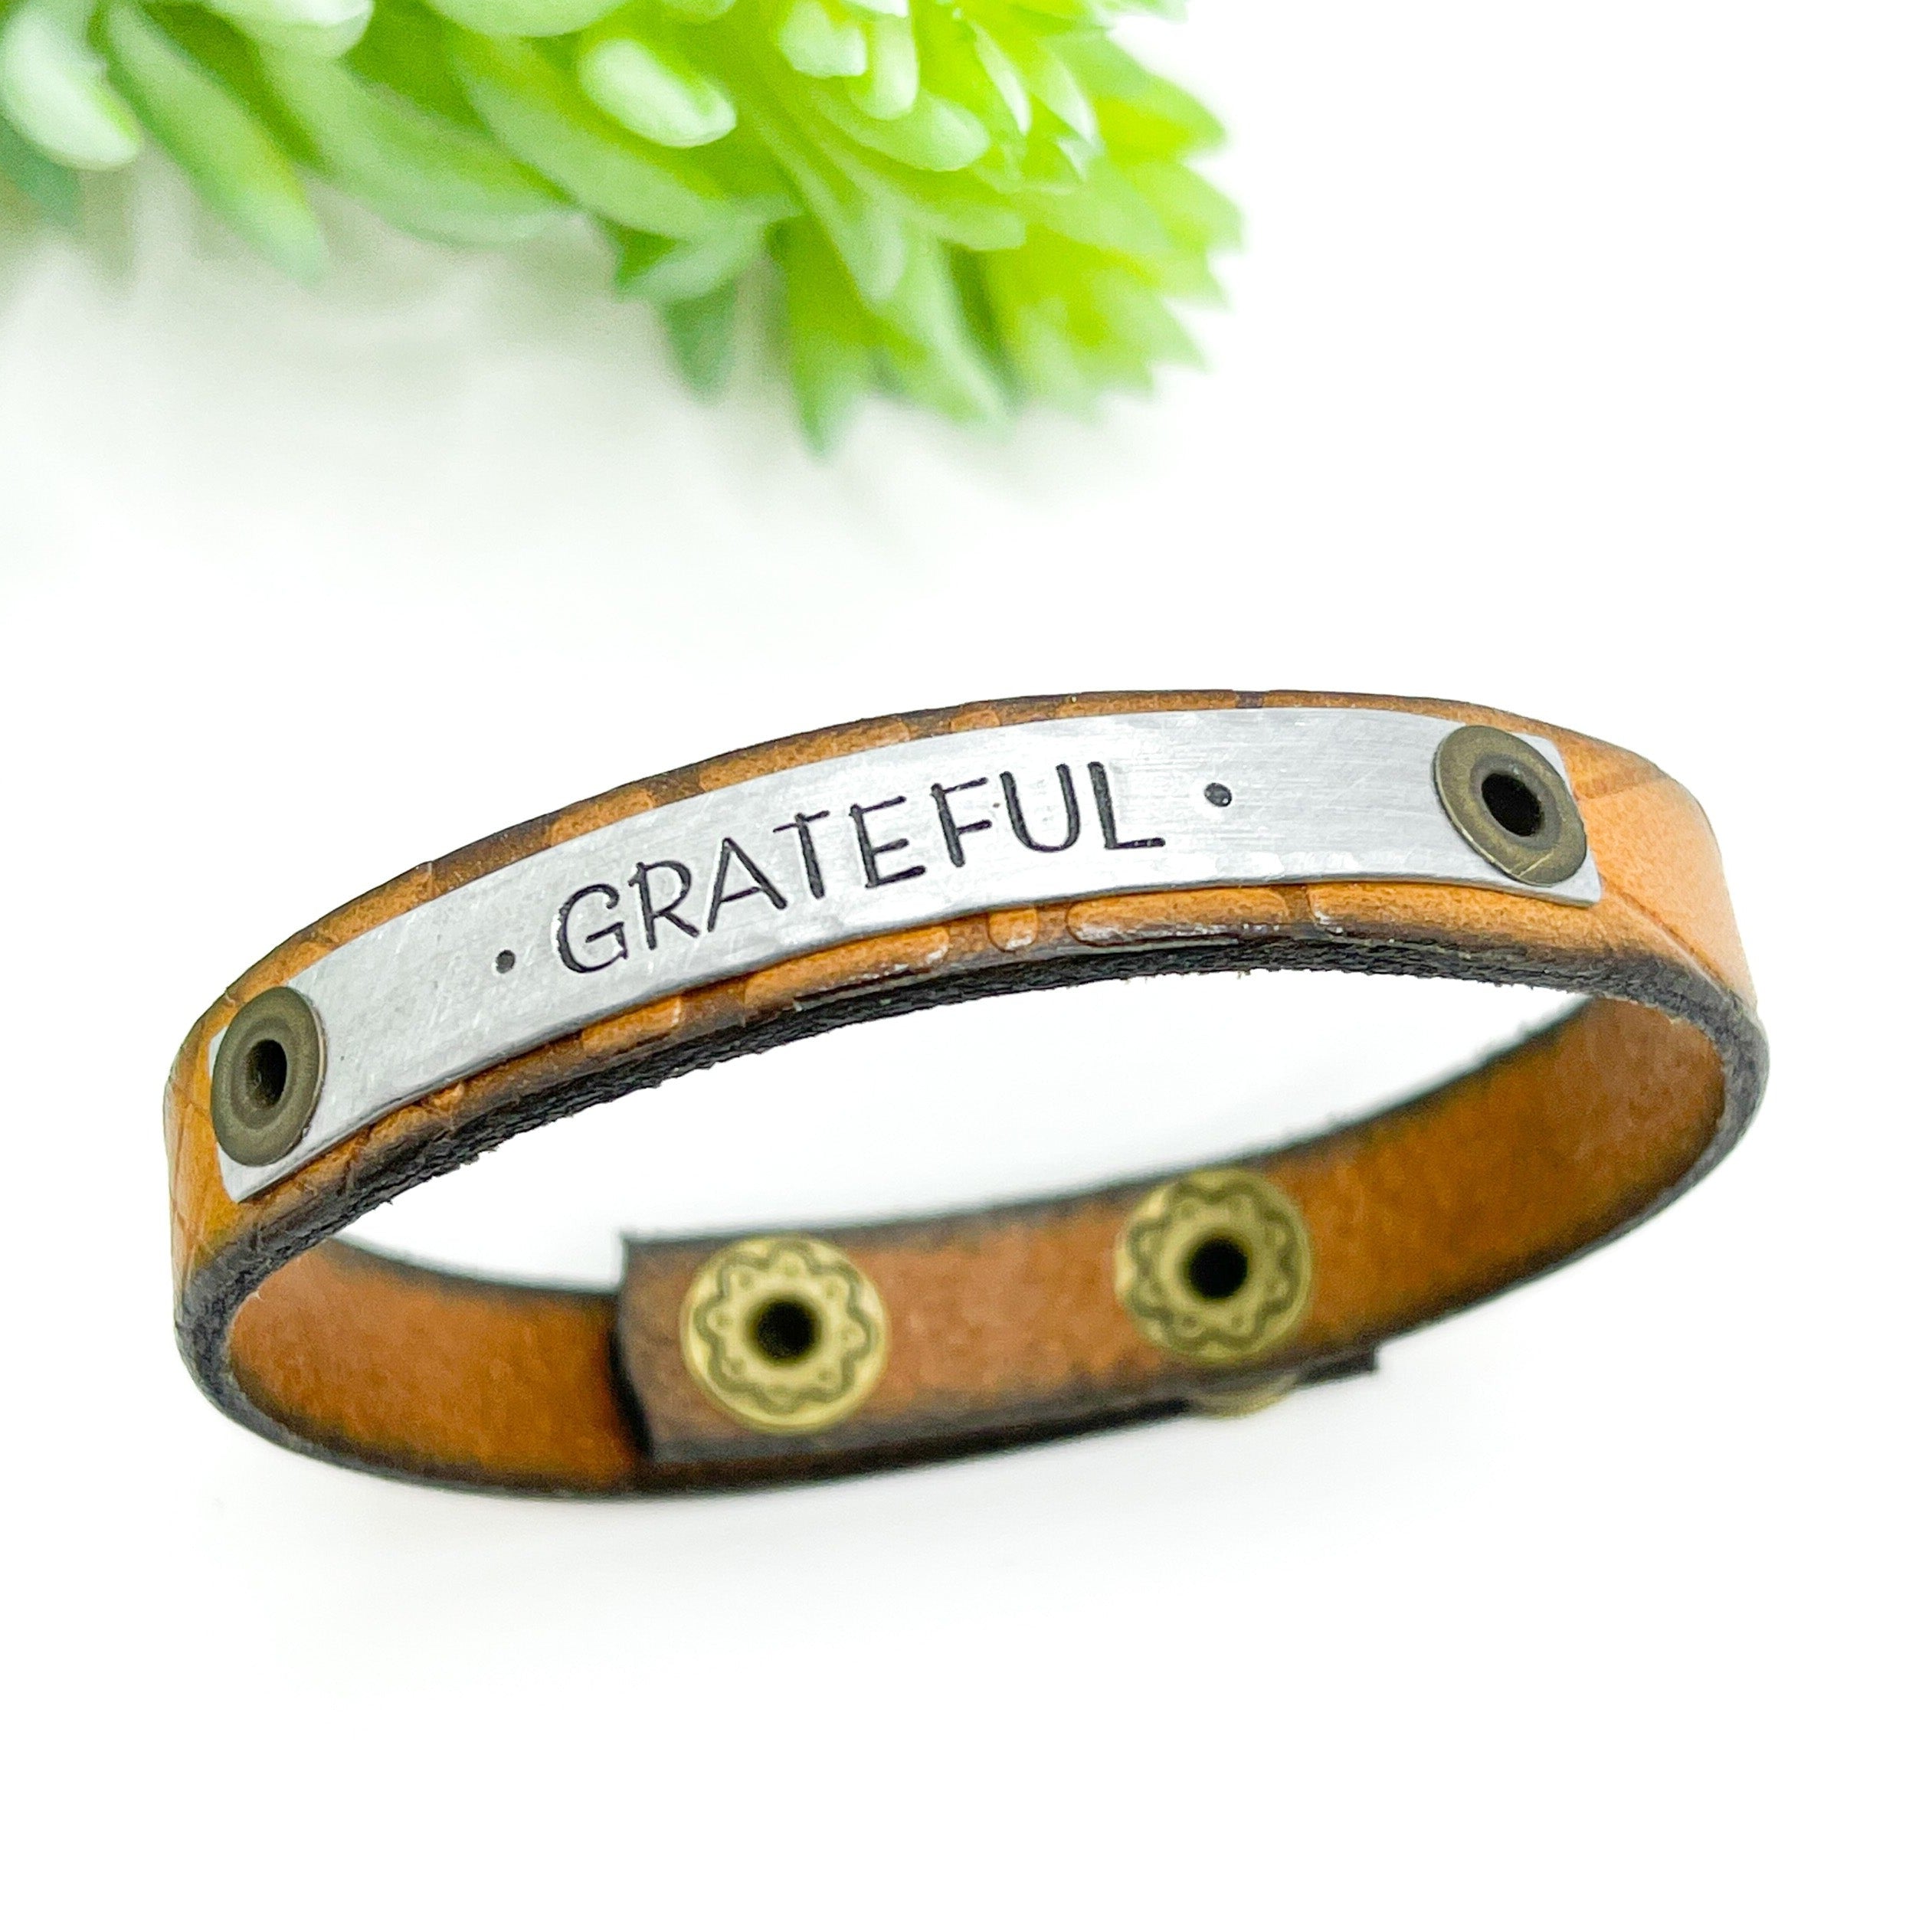 Santa Fe Tan | GRATEFUL | Leather Skinny Bracelet | Adjustable Skinny Bracelets Create Hope Cuffs 